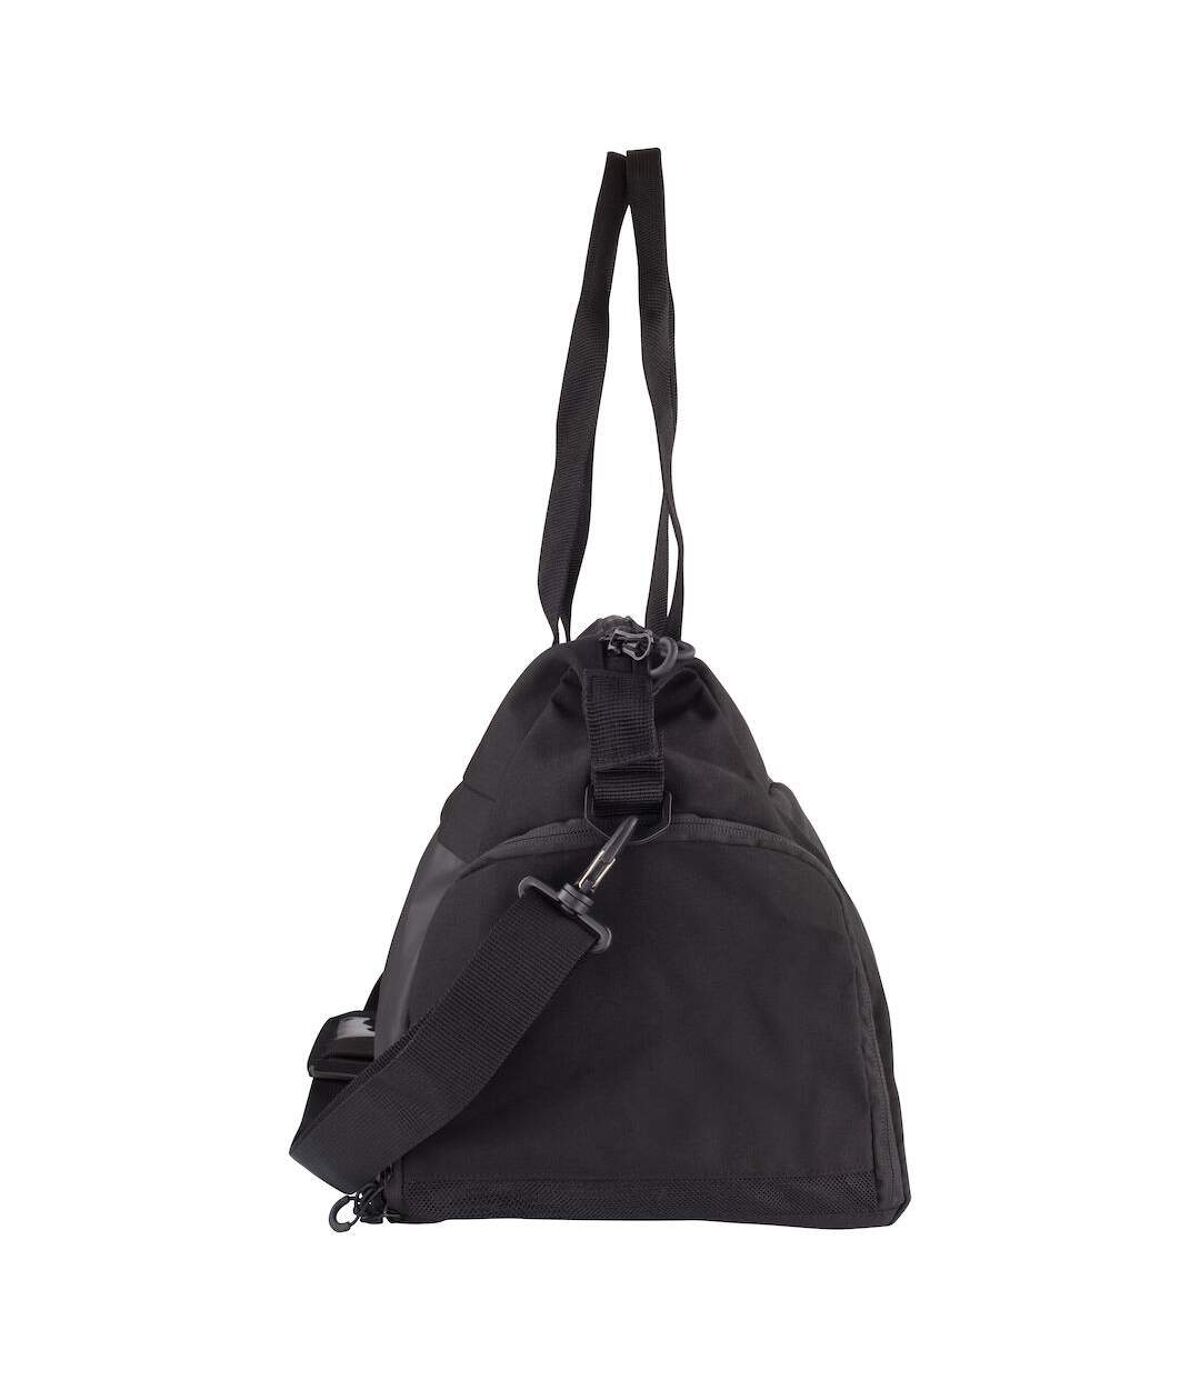 Clique 2.0 Duffle Bag (Black) (One Size)